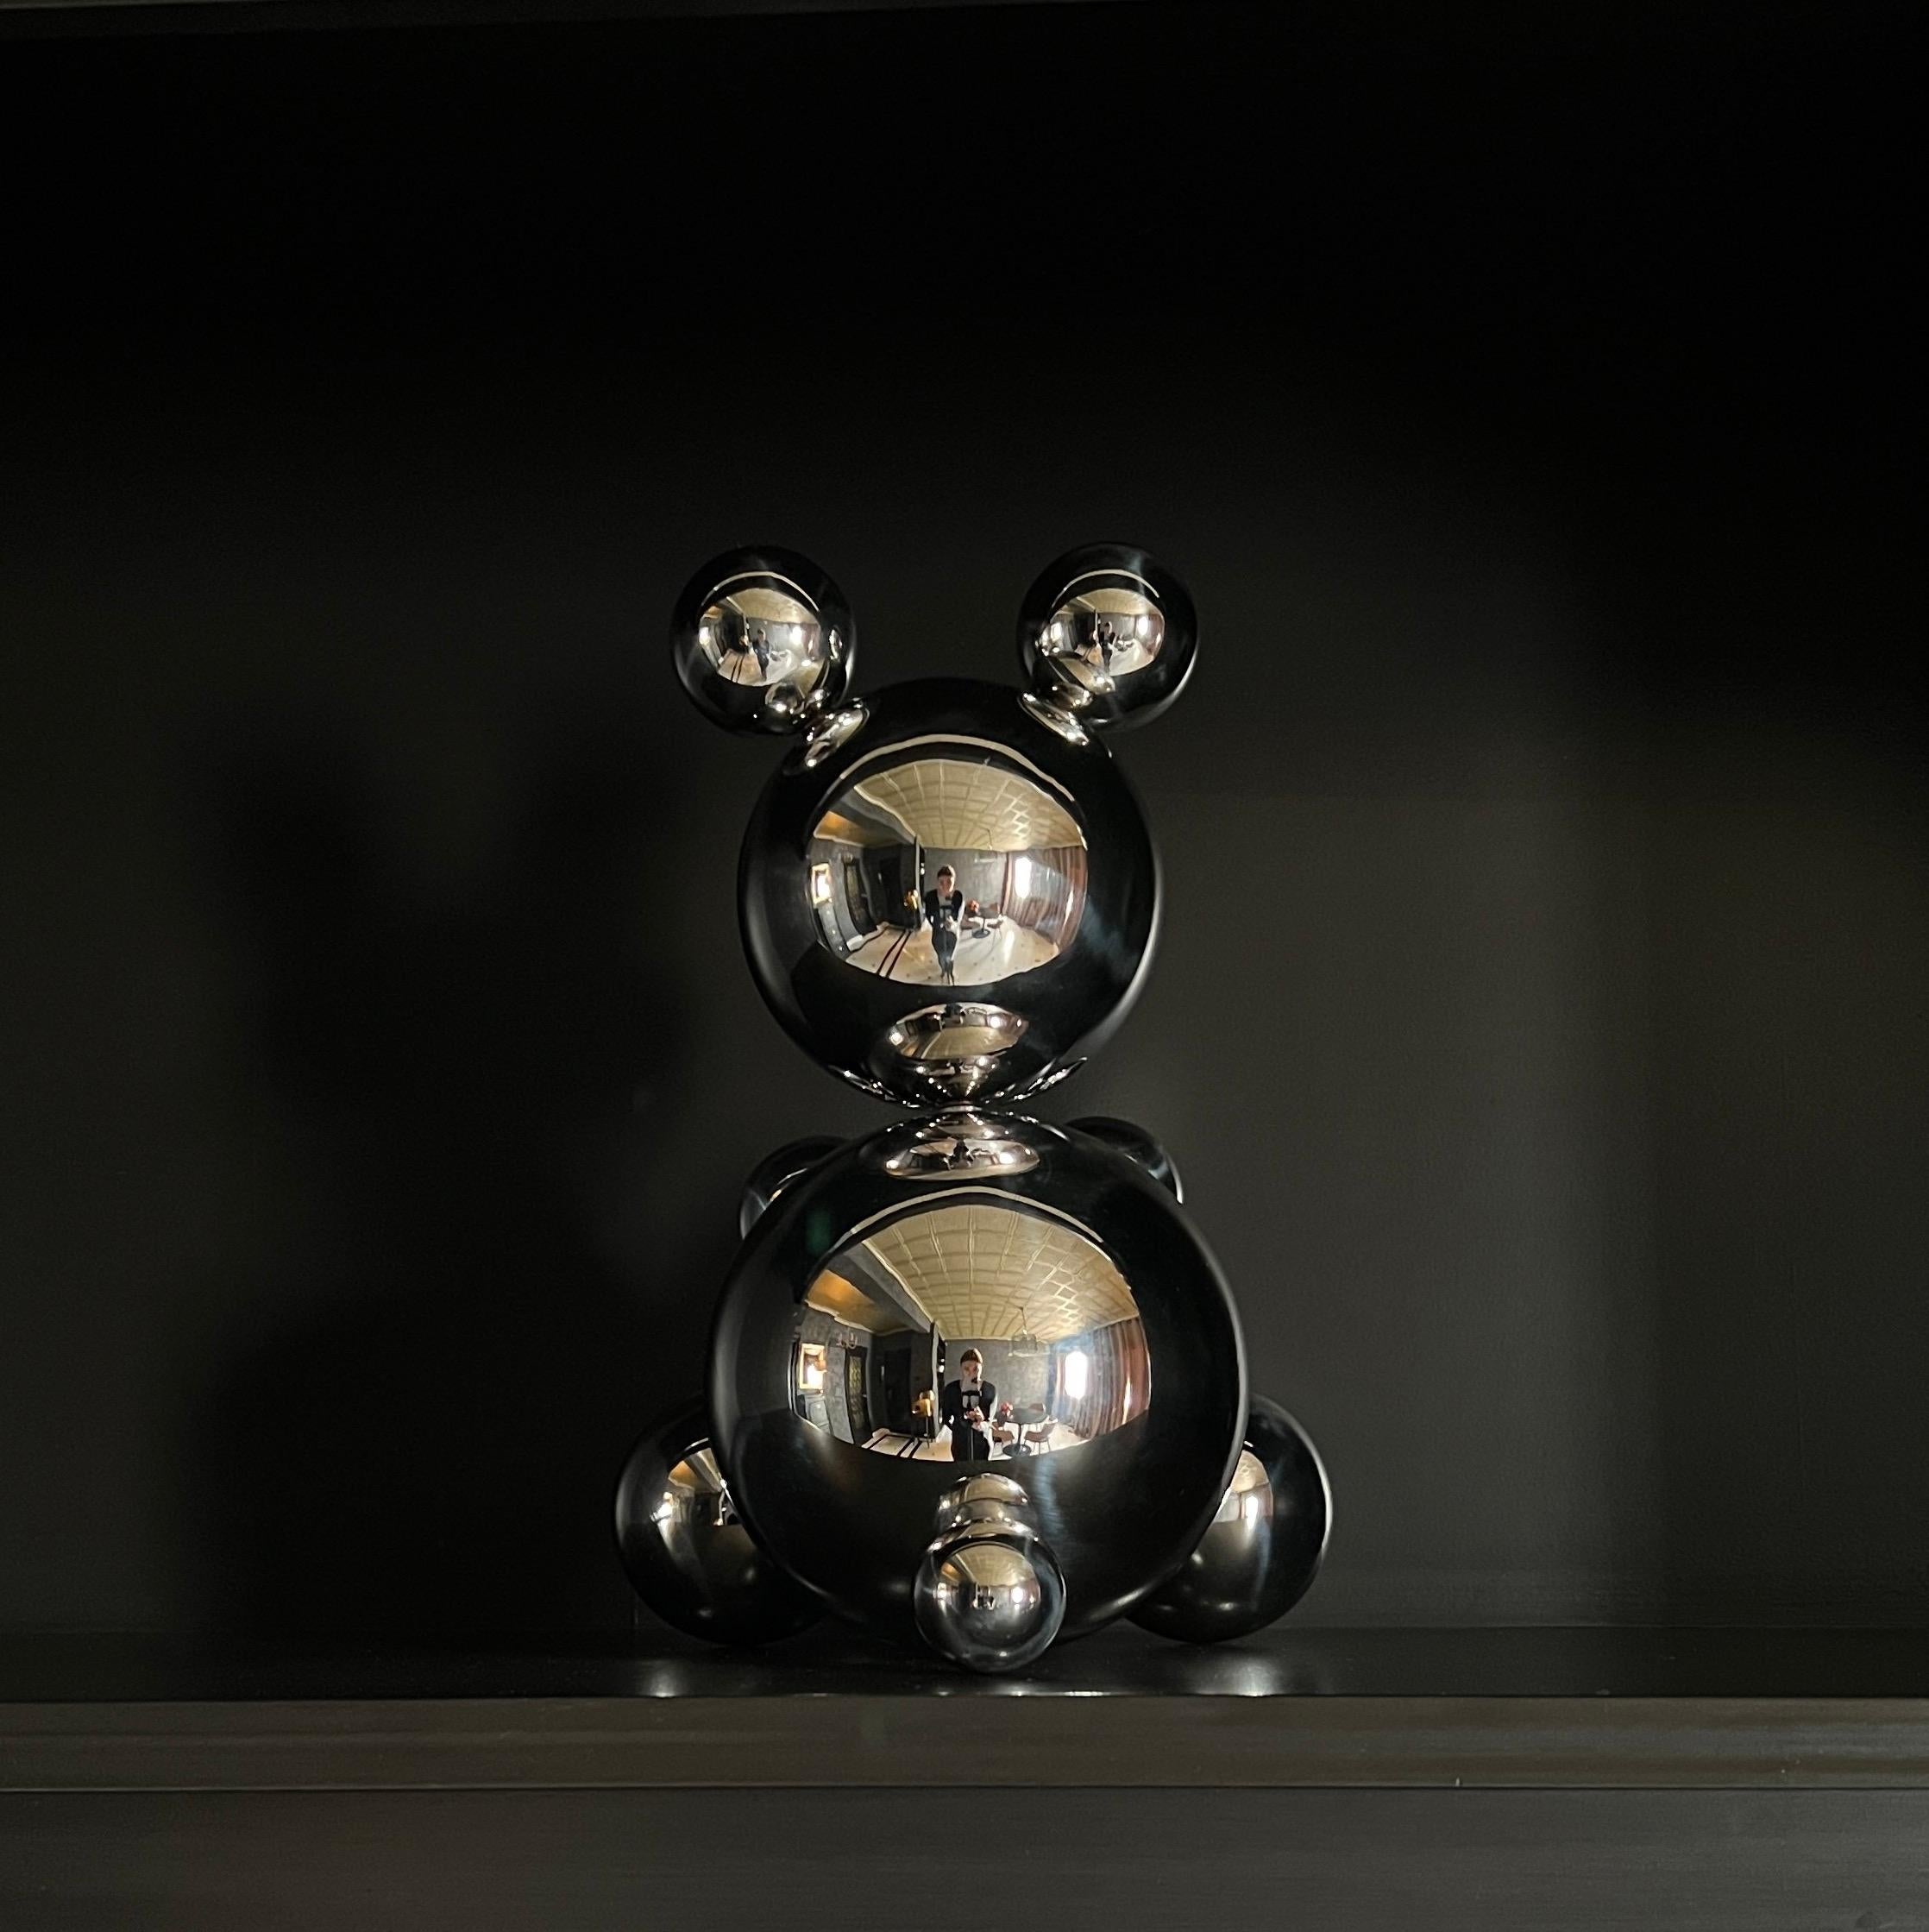 Middle Stainless Steel Bear 'David' Sculpture Minimalistic Animal 2